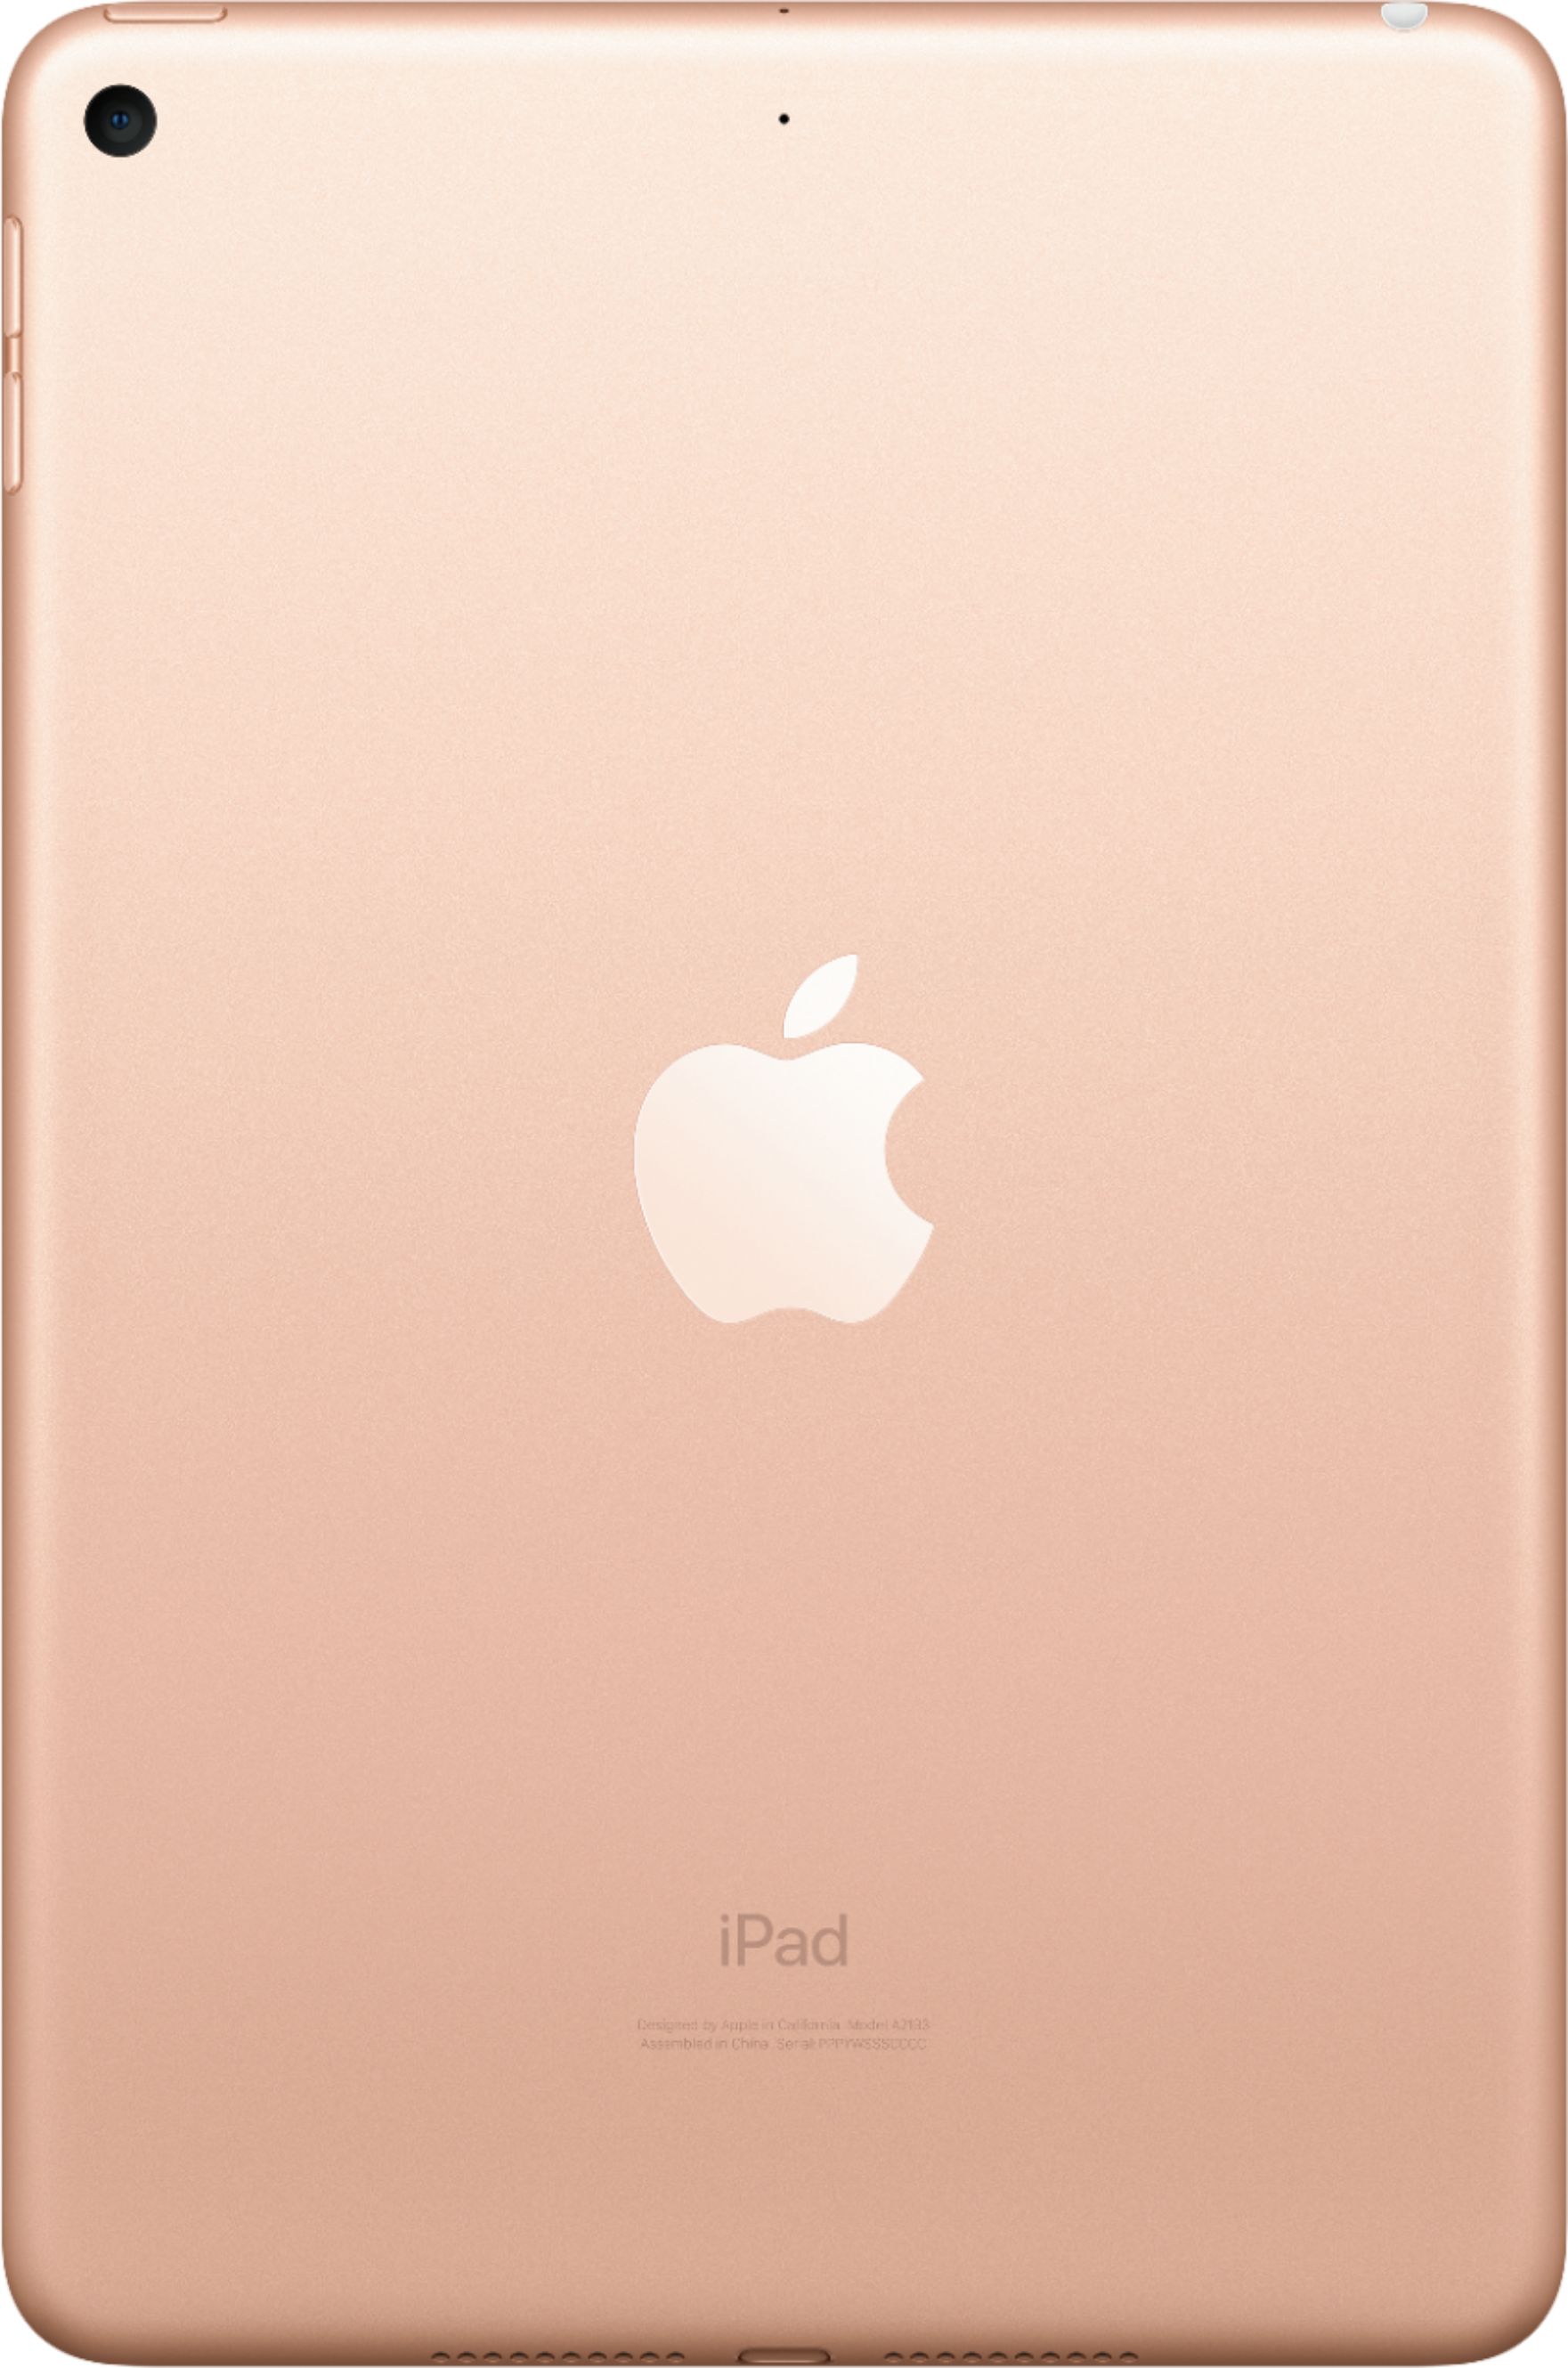 Back View: Apple - Geek Squad Certified Refurbished iPad mini with Wi-Fi - 64GB - Gold